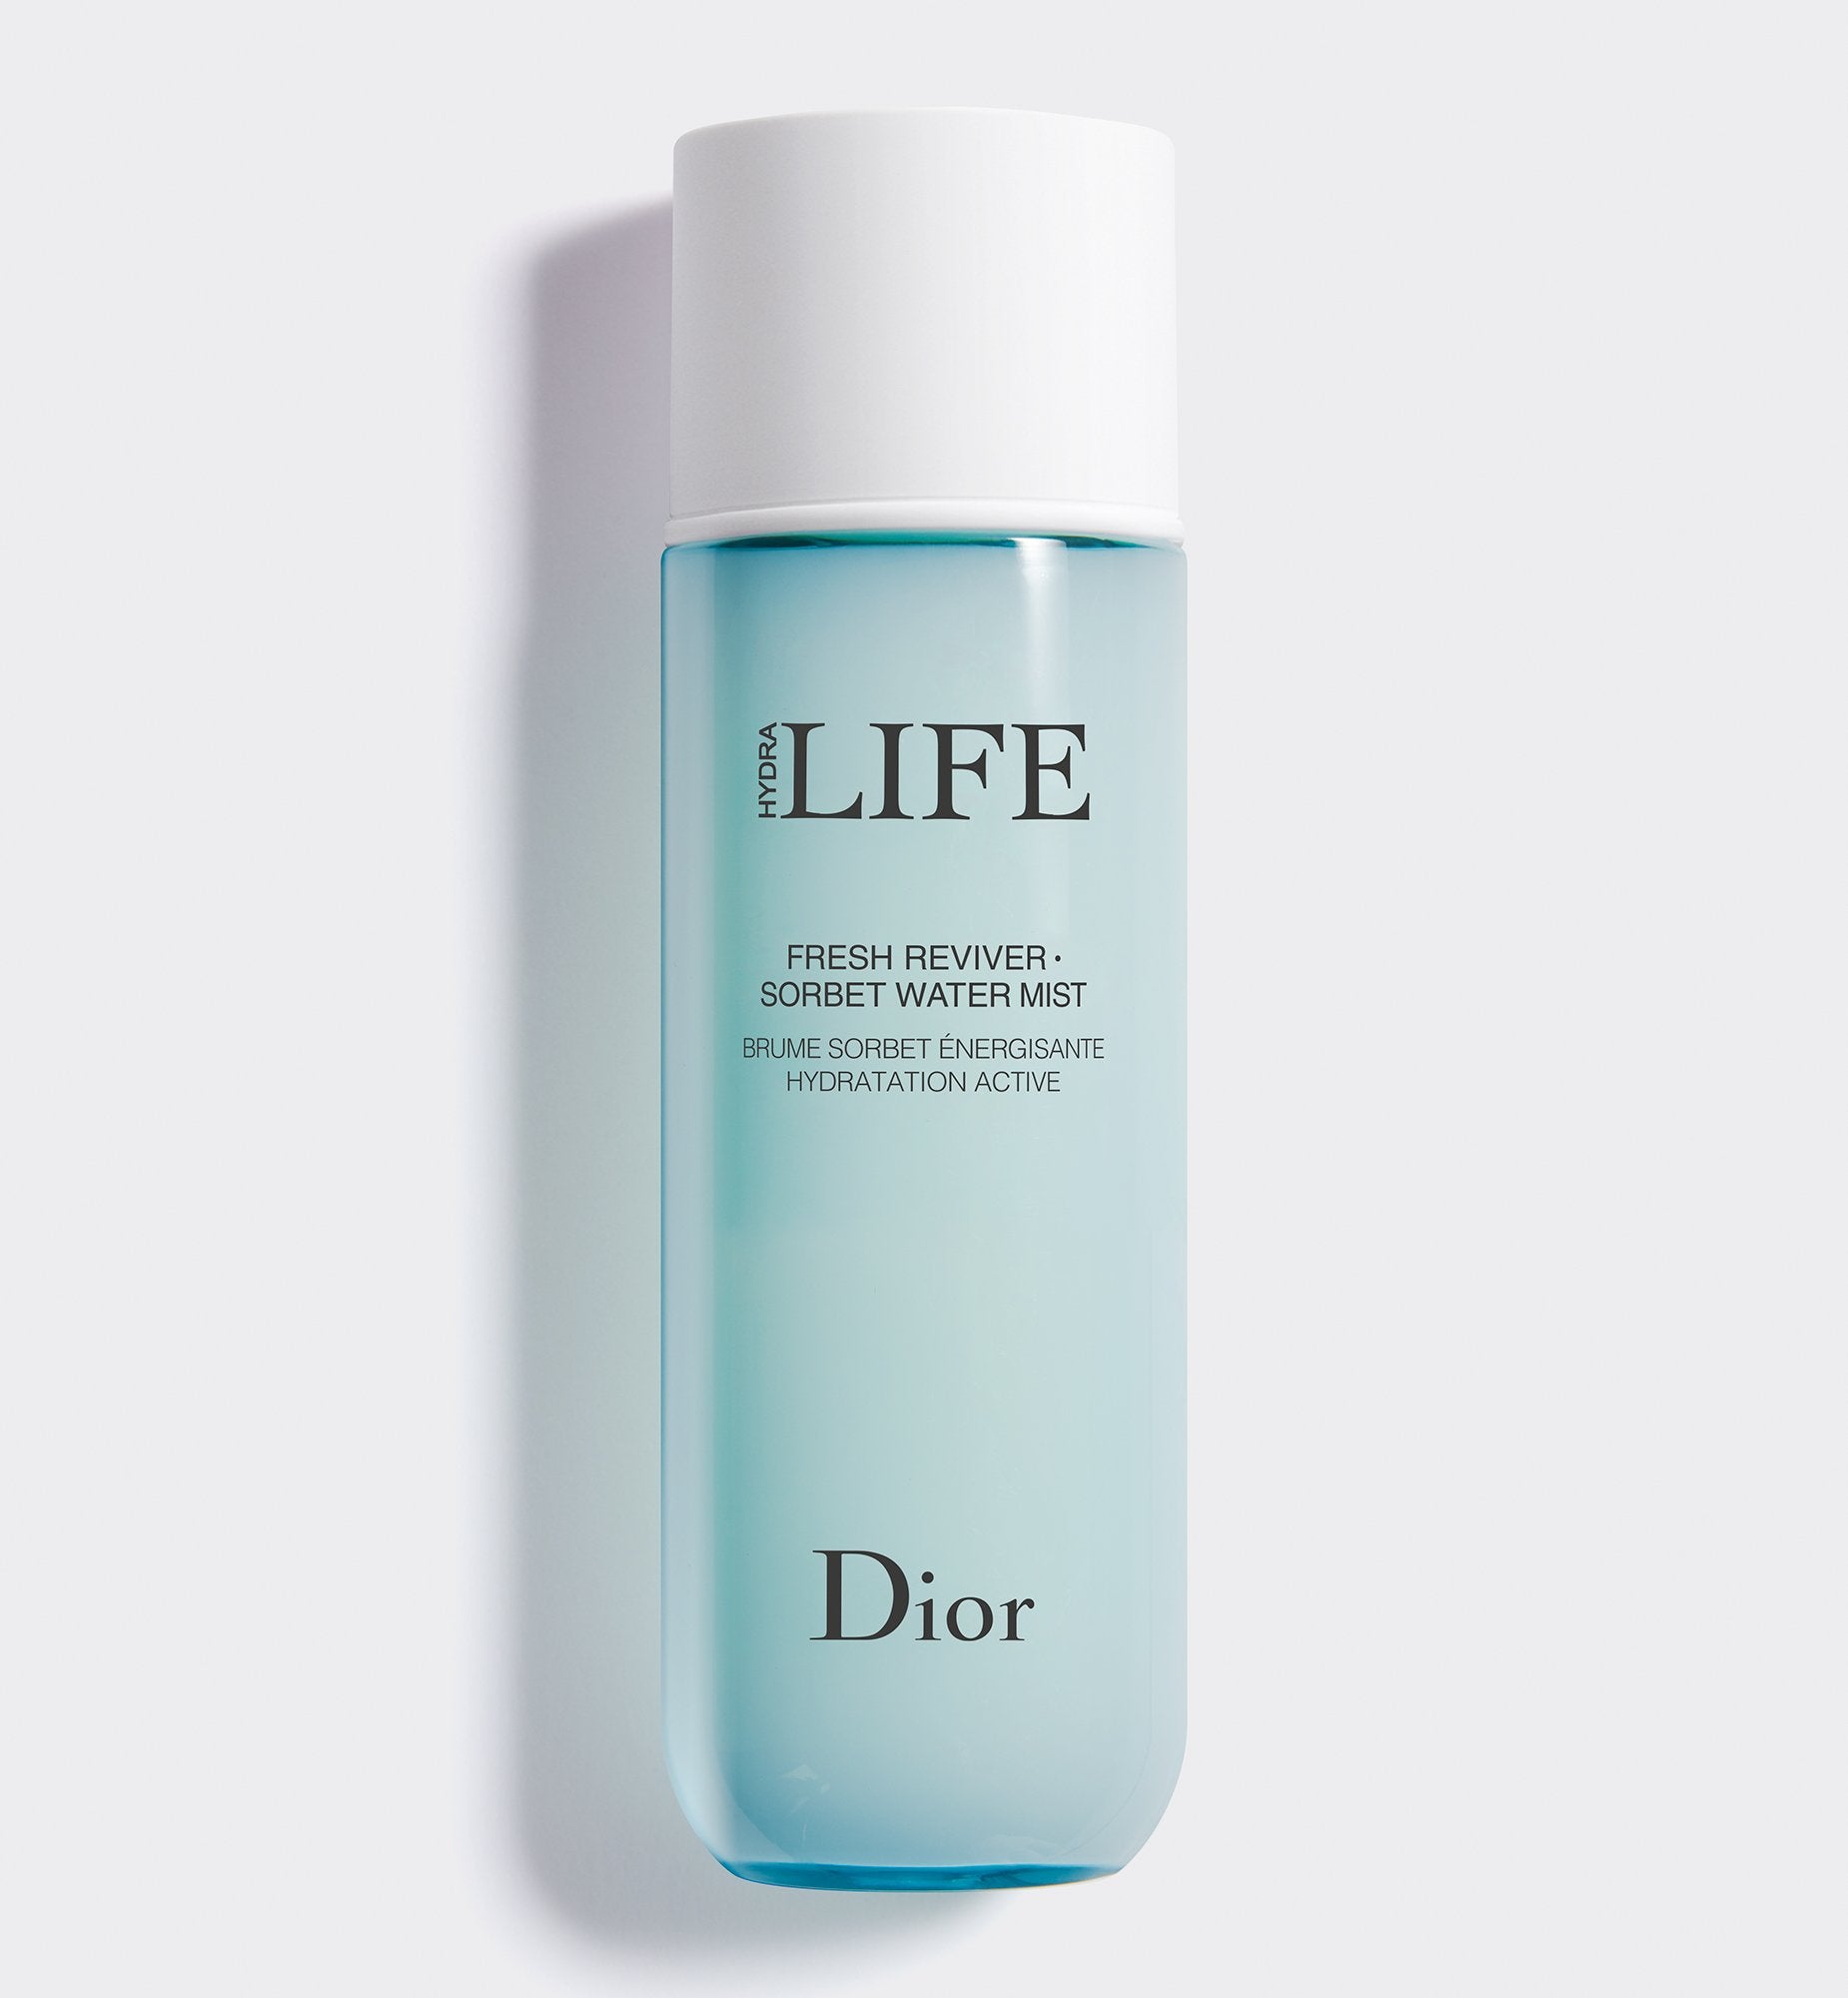 Dior Hydra Life Glow Better  Pores Away Masks Review  Glam Skincare   alishainc  YouTube